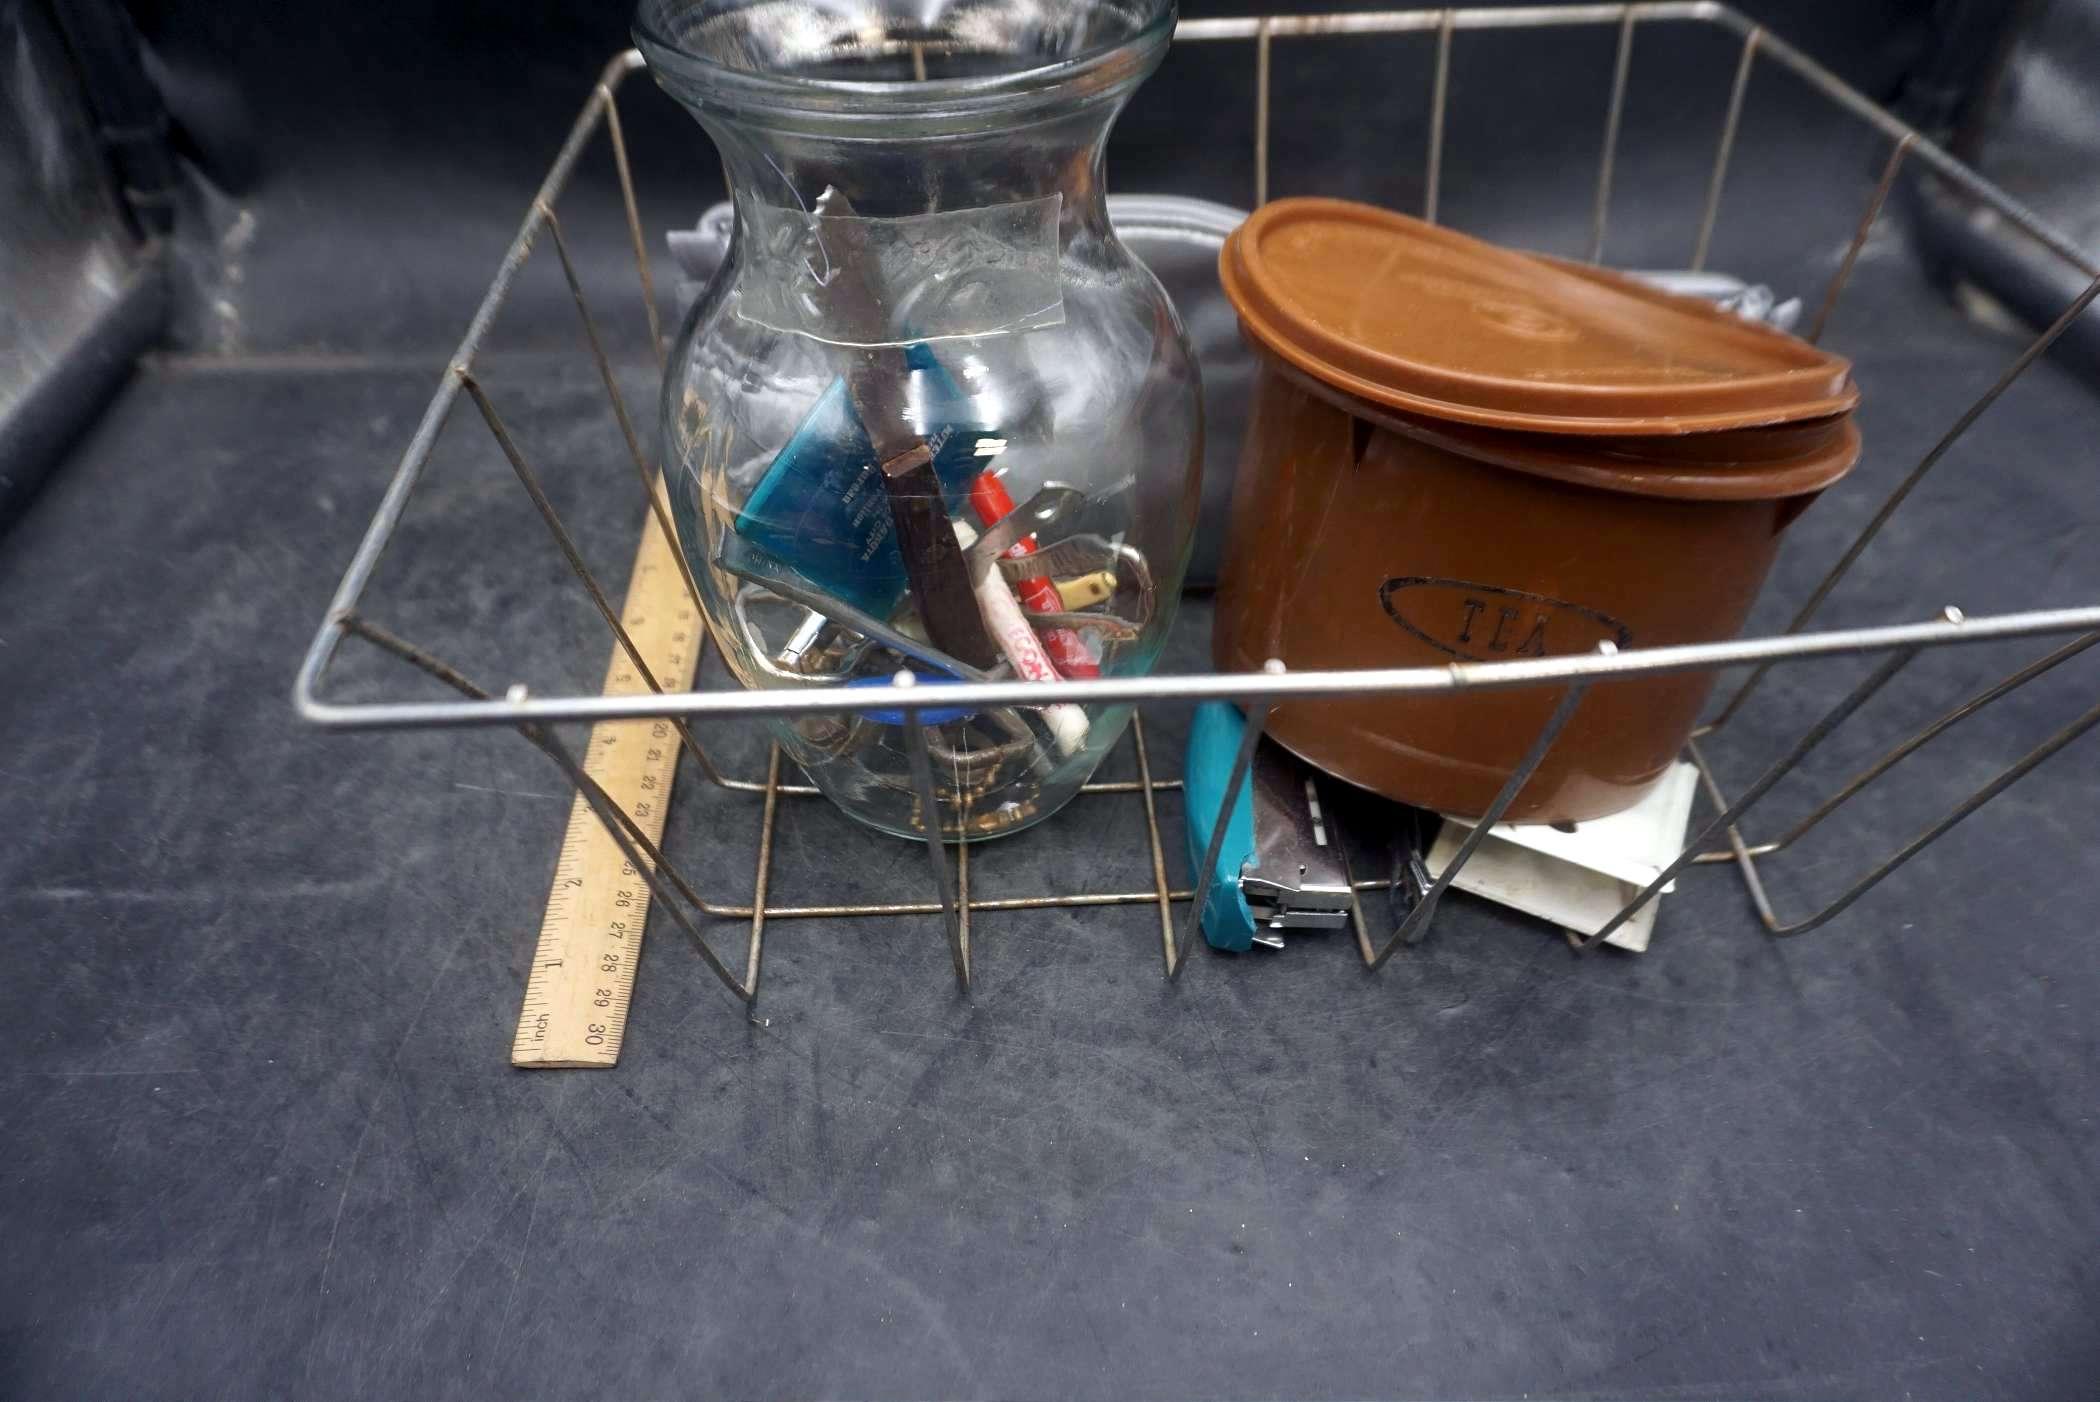 Wire Basket, Glass Vase, Tea Container, Stapler